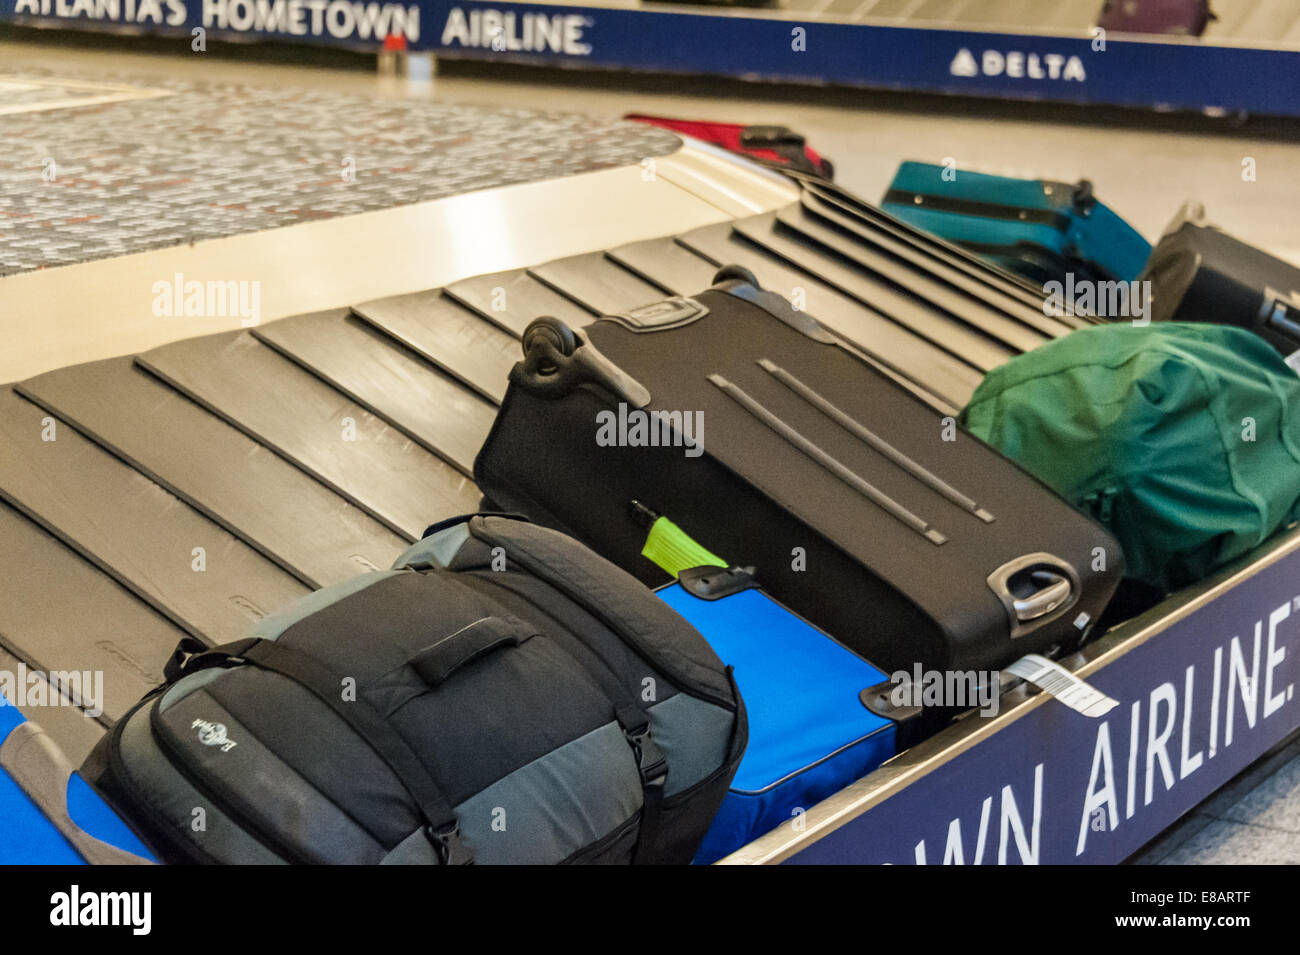 Baggage claim carousel with luggage at Hartsfield-Jackson Atlanta International Airport in Atlanta, Georgia, USA. Stock Photo